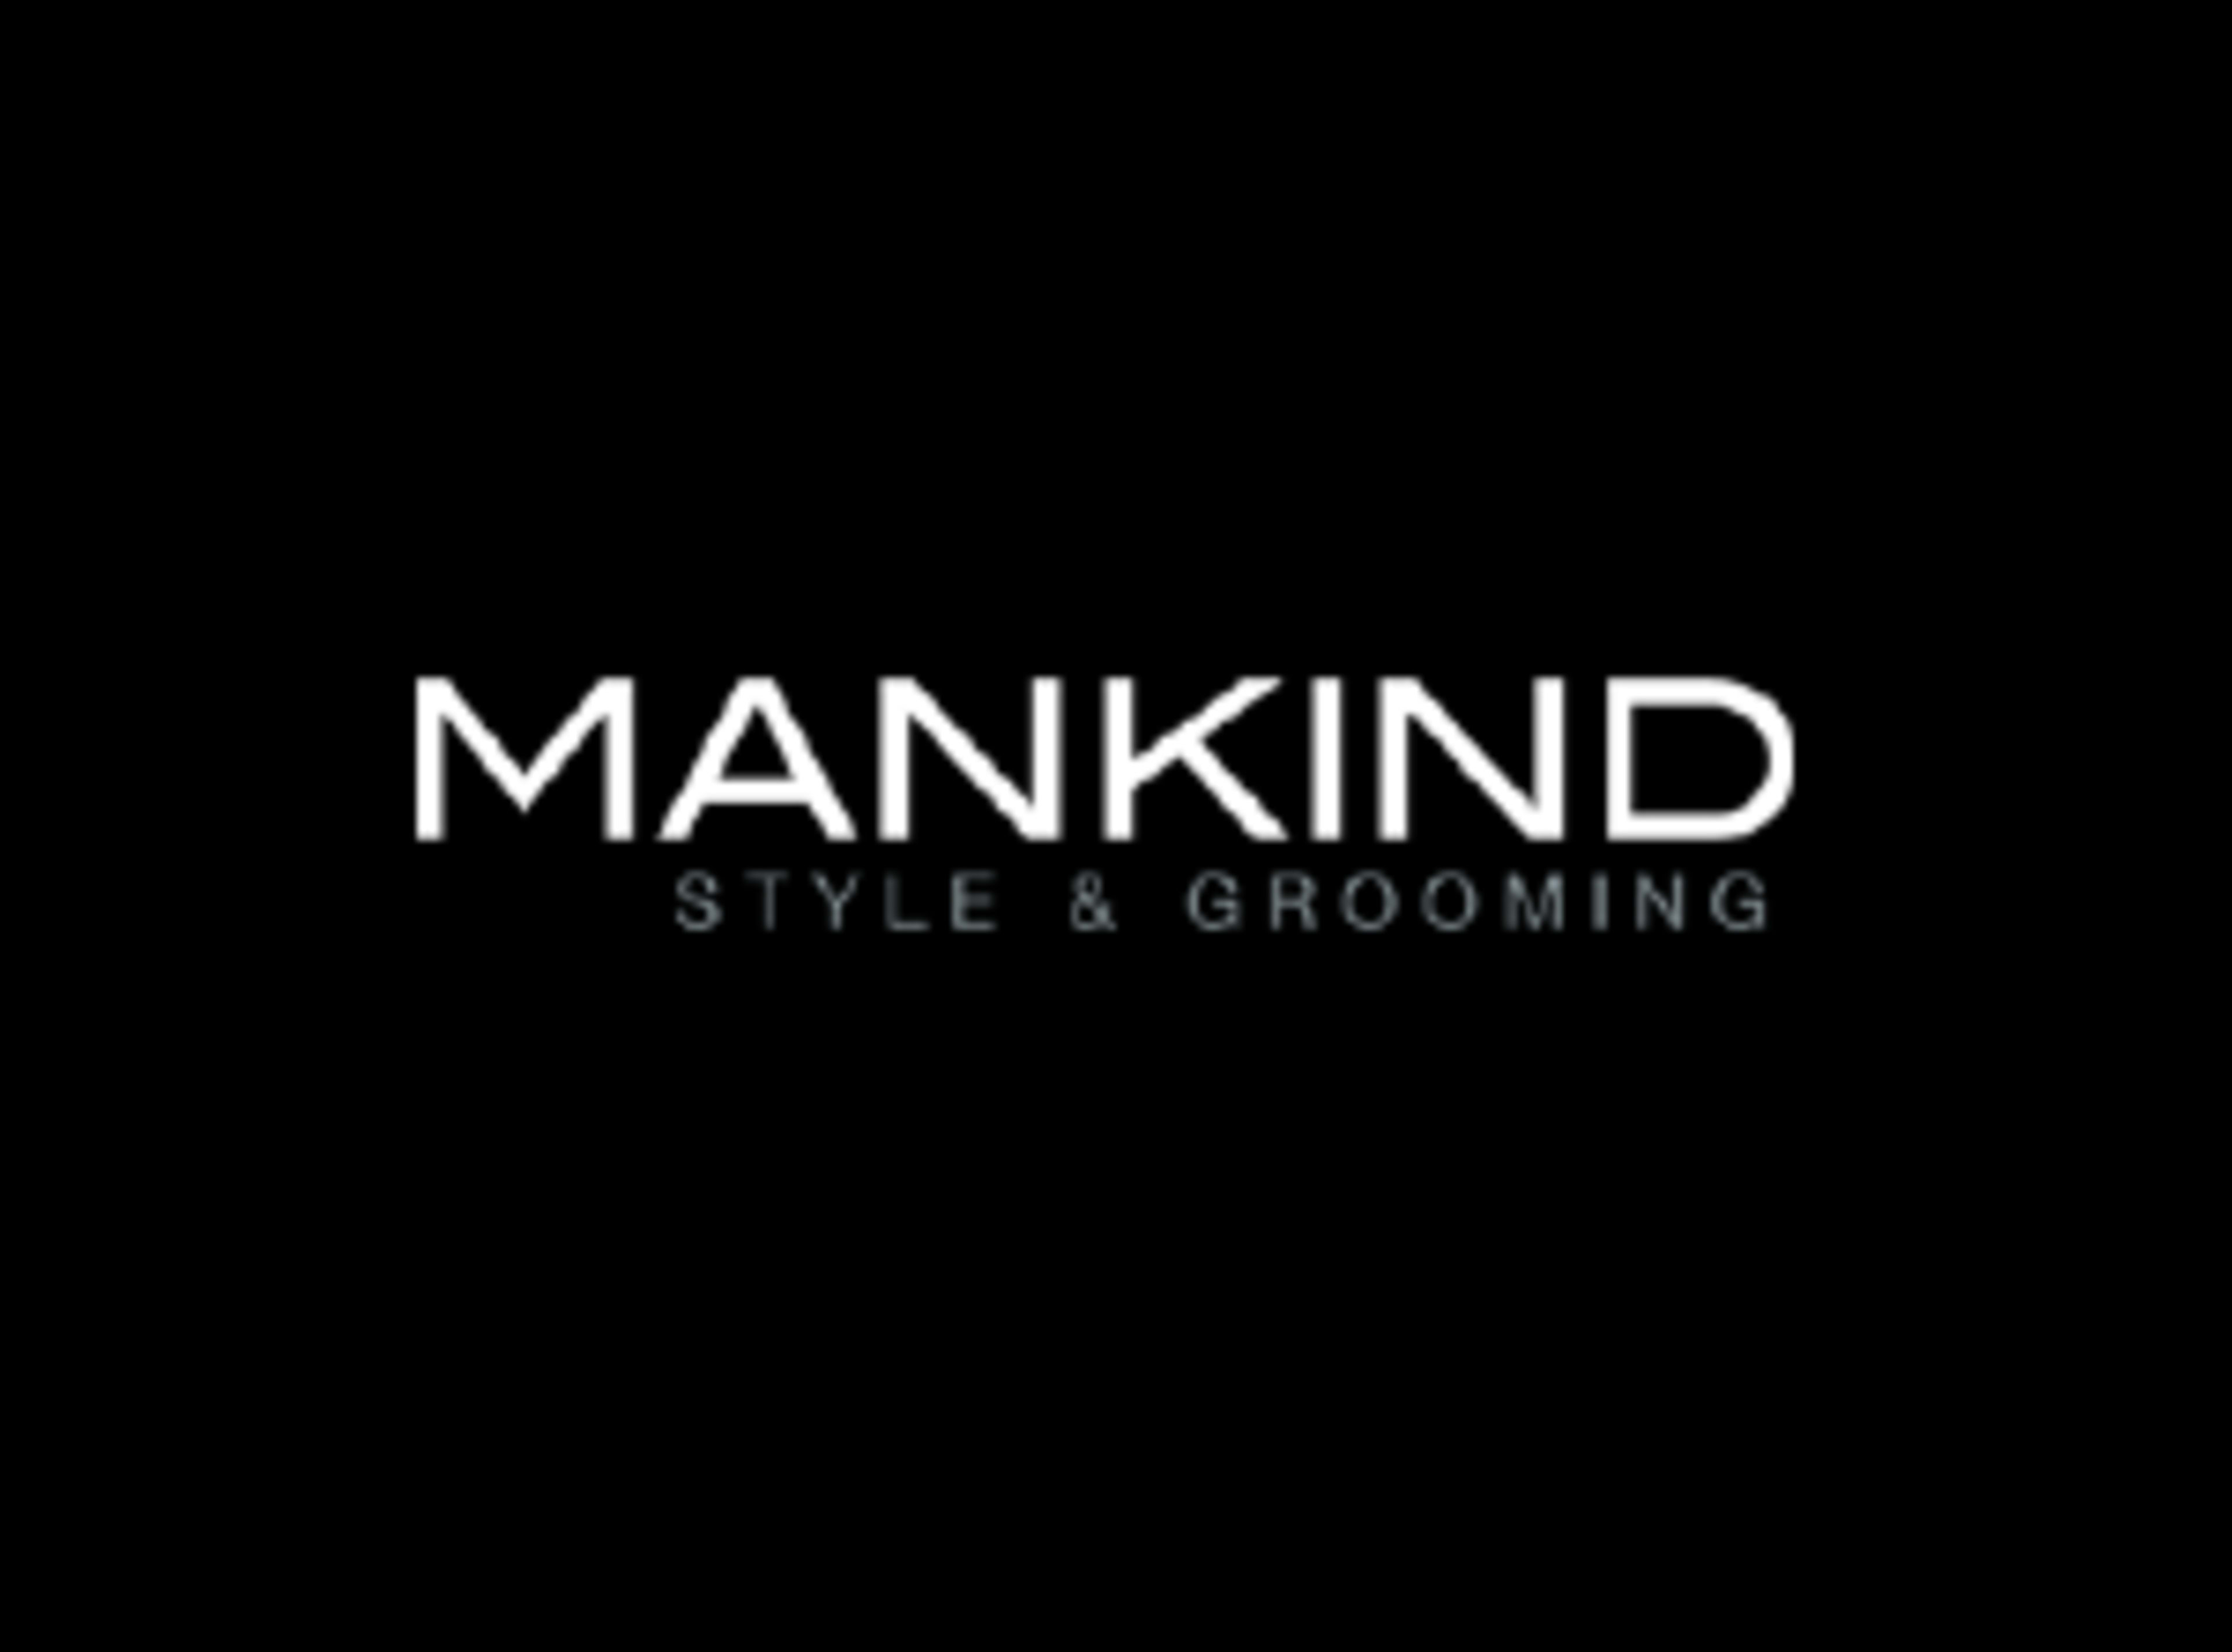 Mankind Code